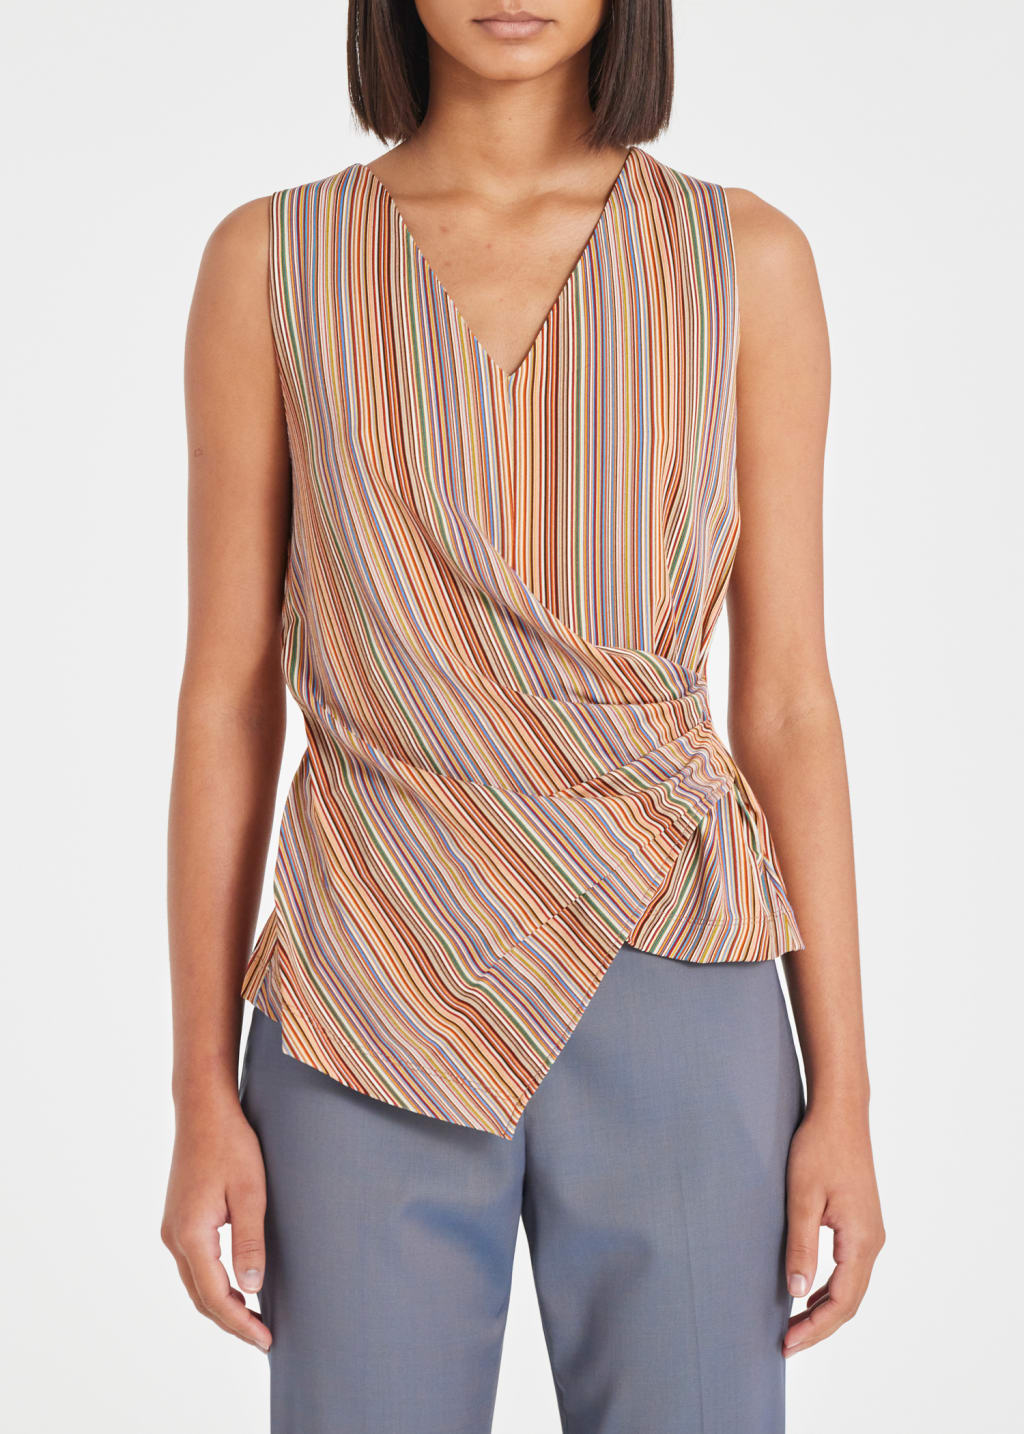 Product View - Women's 'Signature Stripe' Wrap Vest Top by Paul Smith